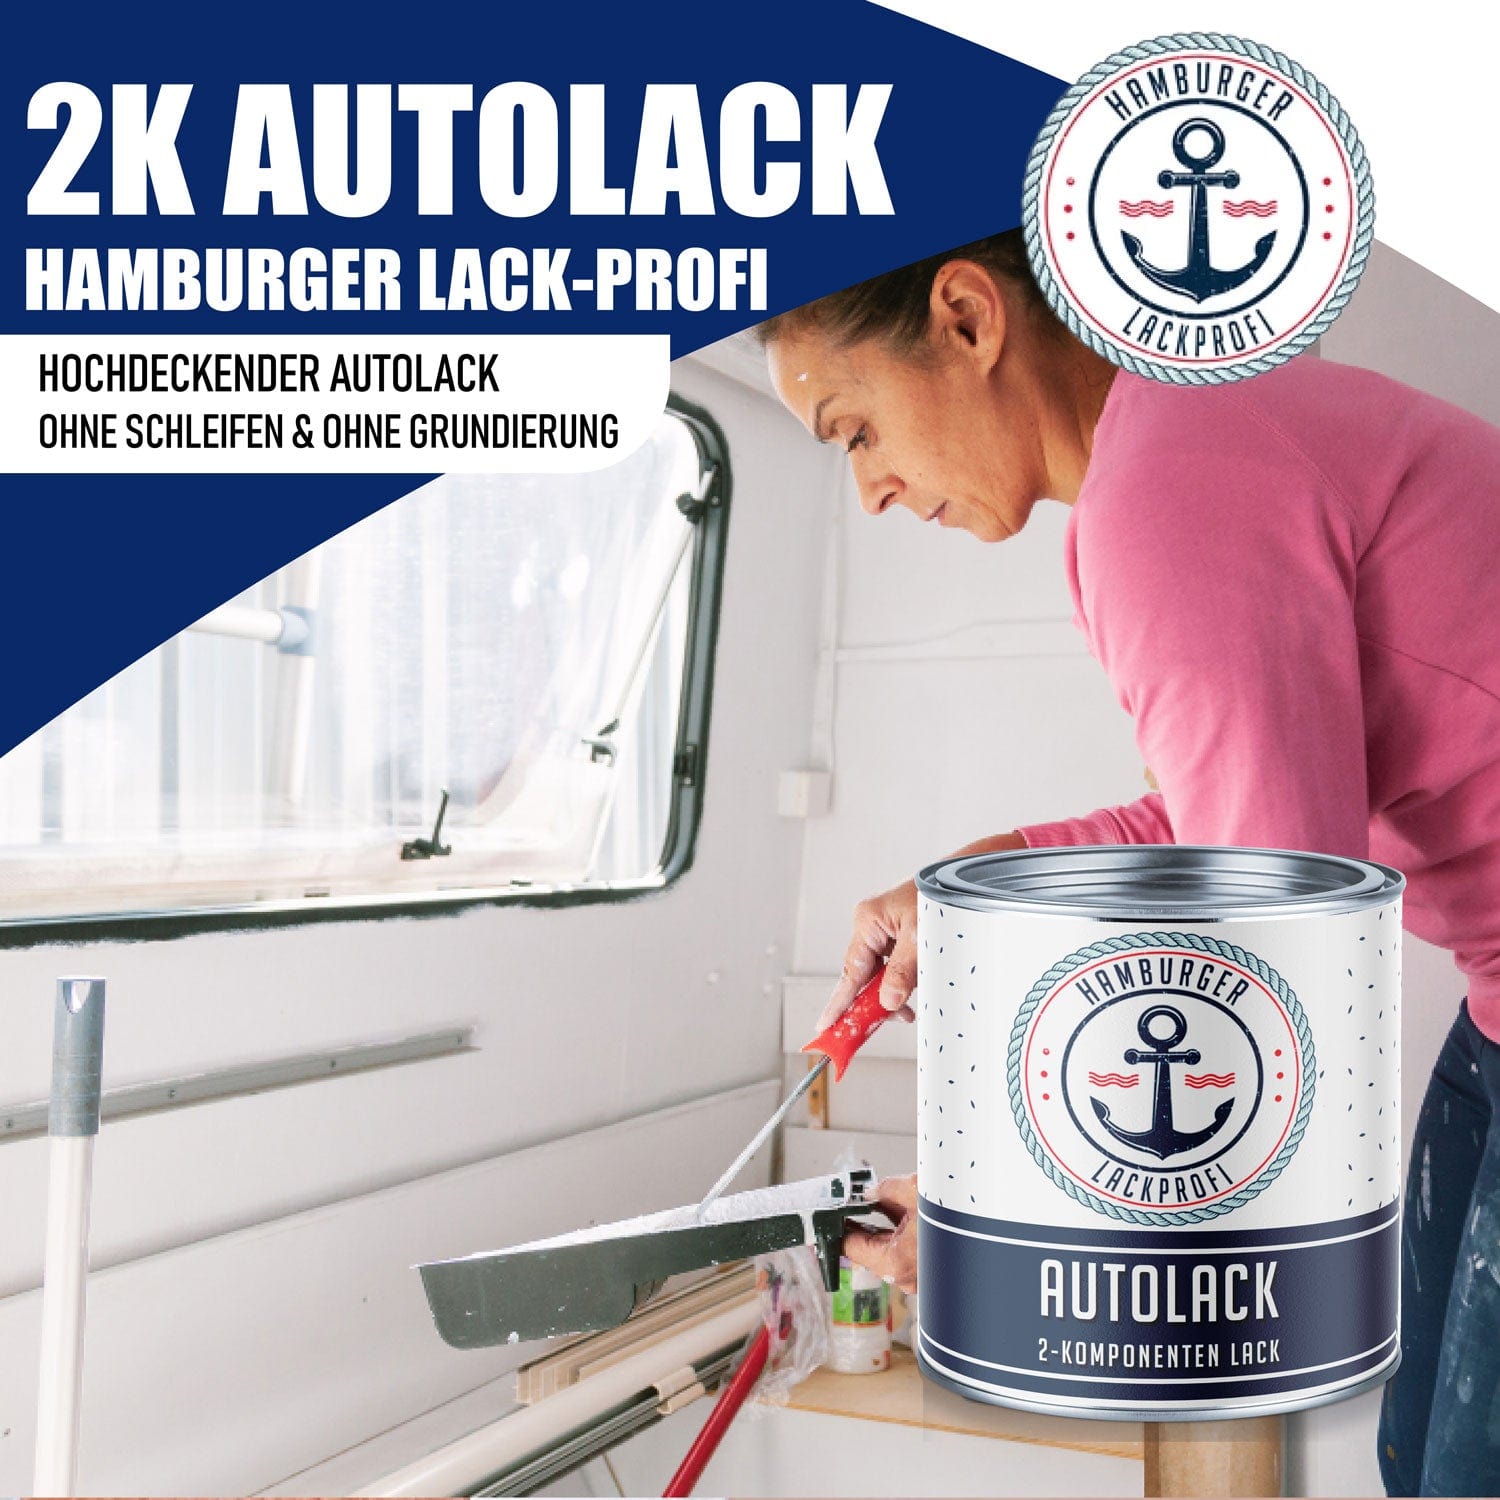 Hamburger Lack-Profi Lacke & Beschichtungen Hamburger Lack-Profi 2K Autolack in Verkehrspurpur RAL 4006 mit Lackierset (X300) & Verdünnung (1 L) - 30% Sparangebot